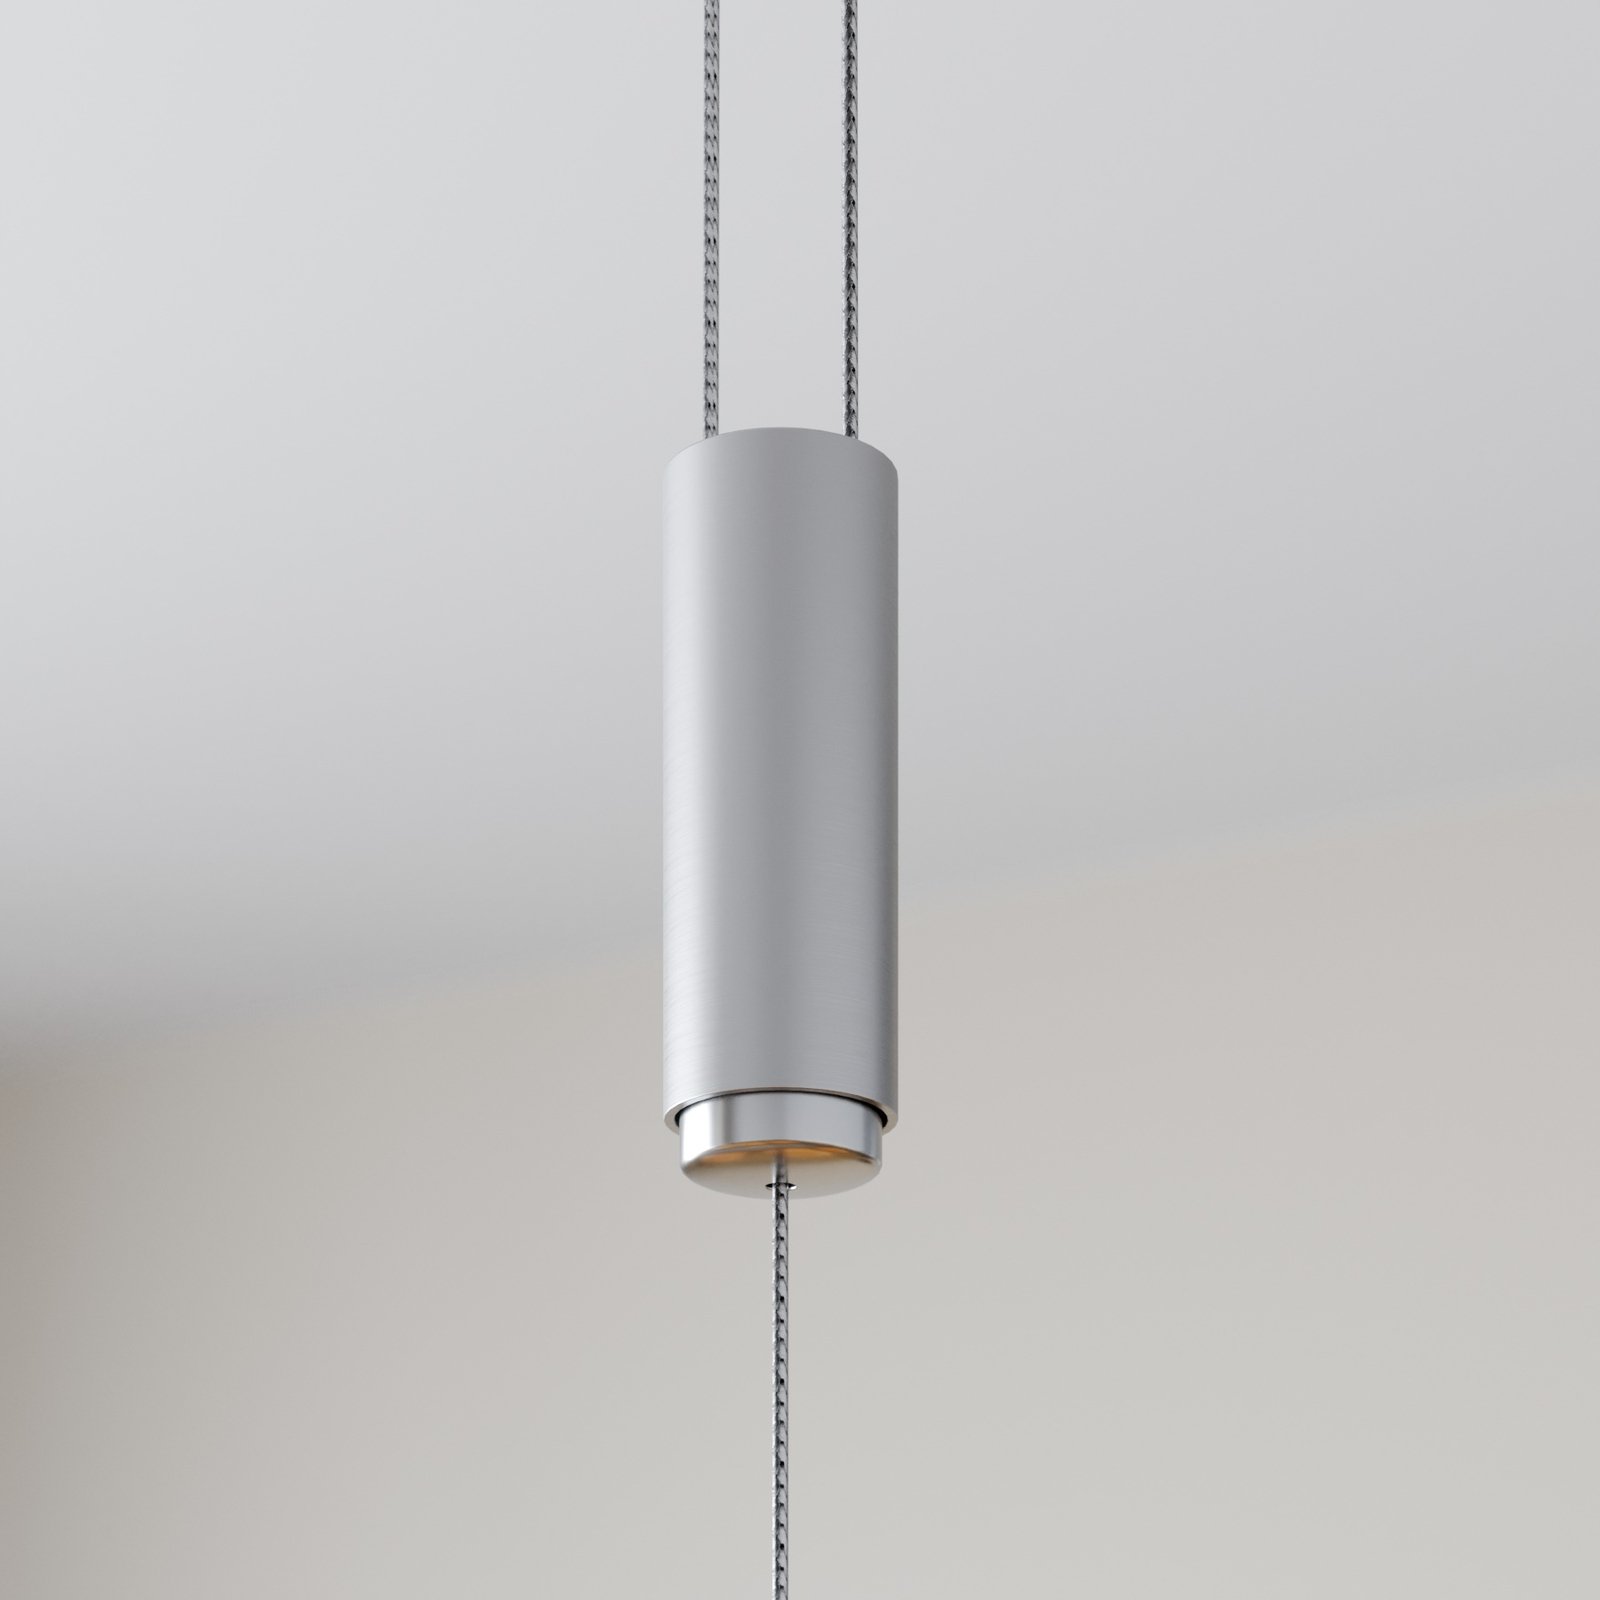 Suspension LED Arnik, dimmable, 180 cm